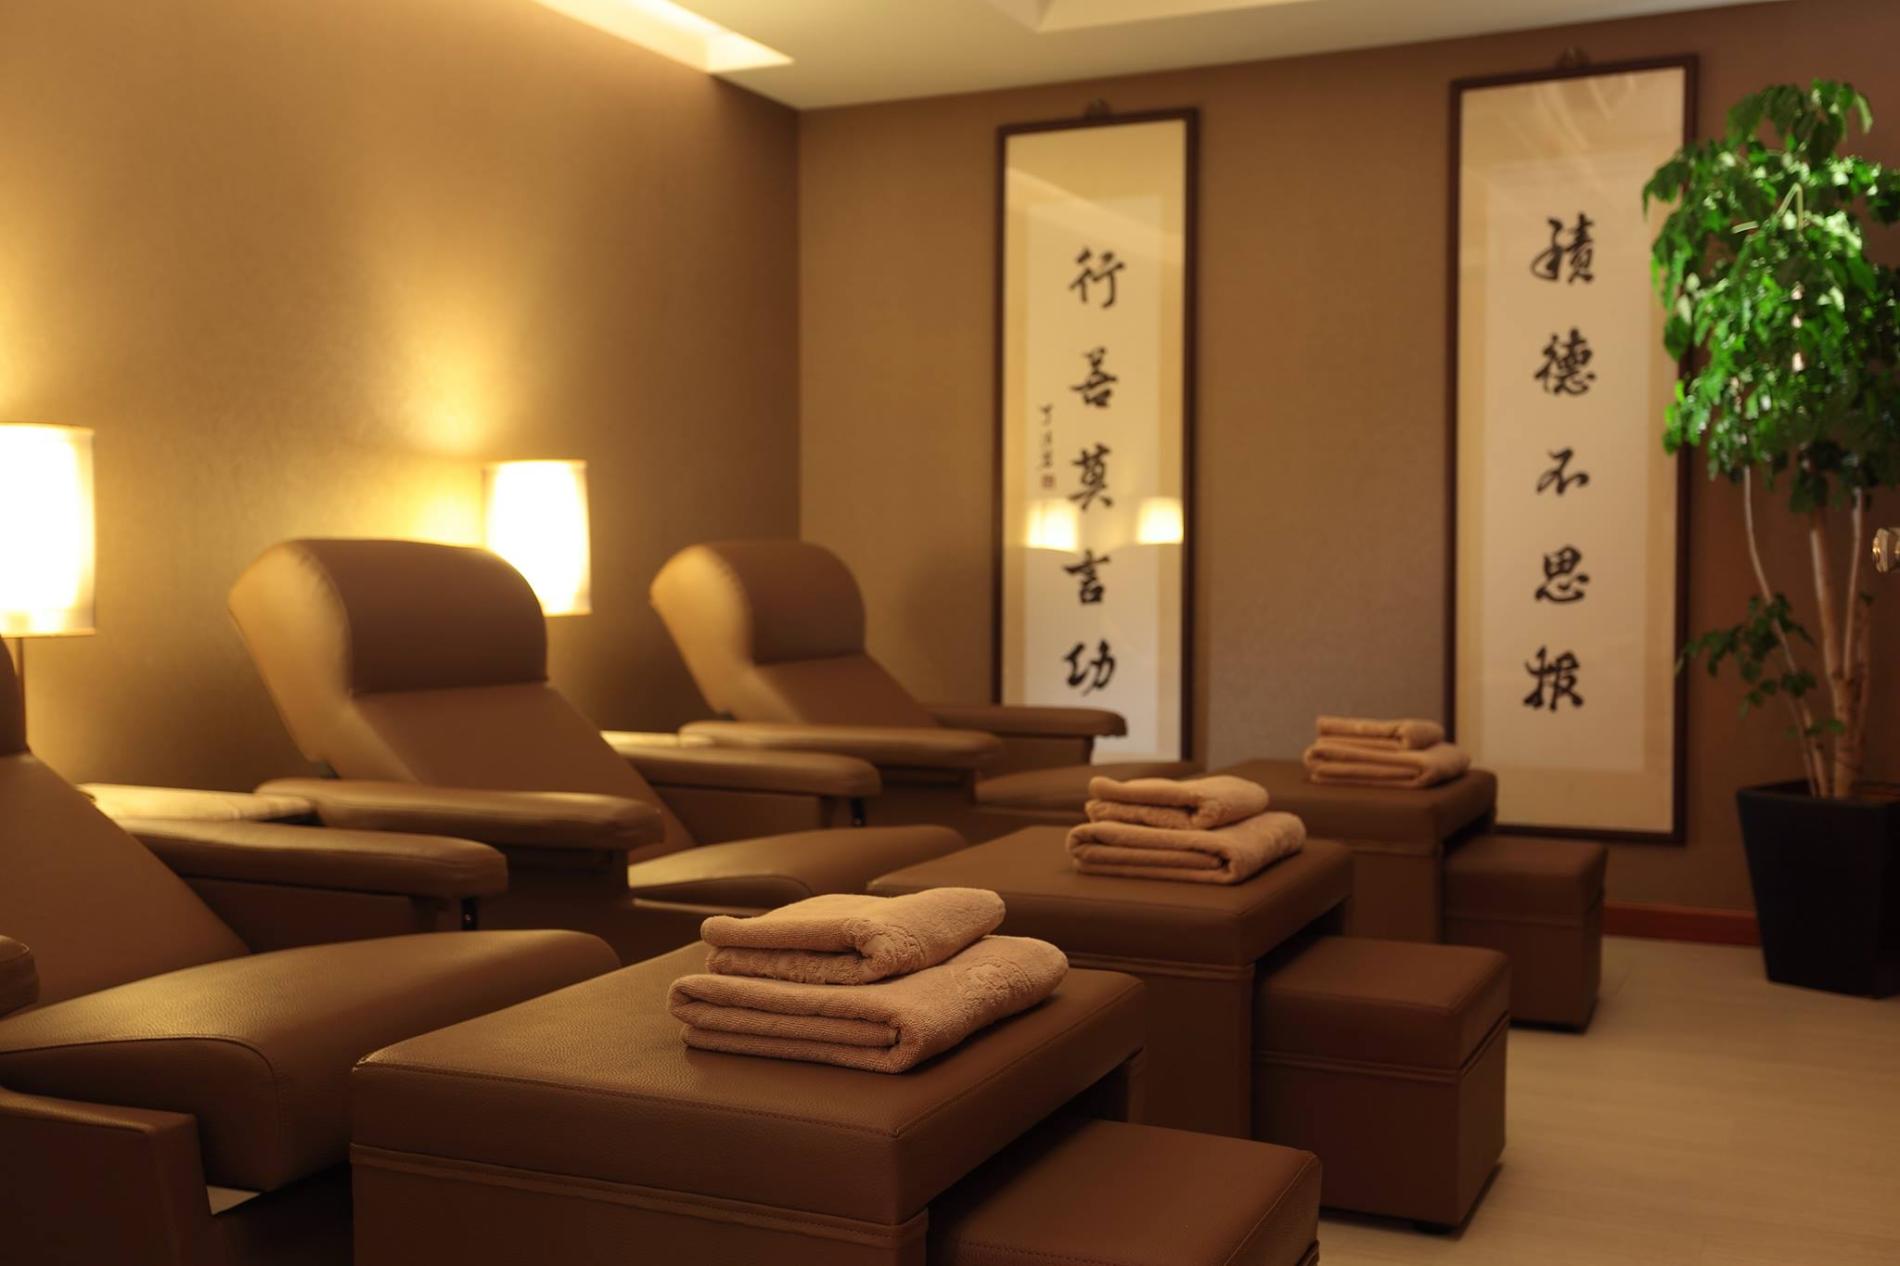 Massageroom.com in Nanjing